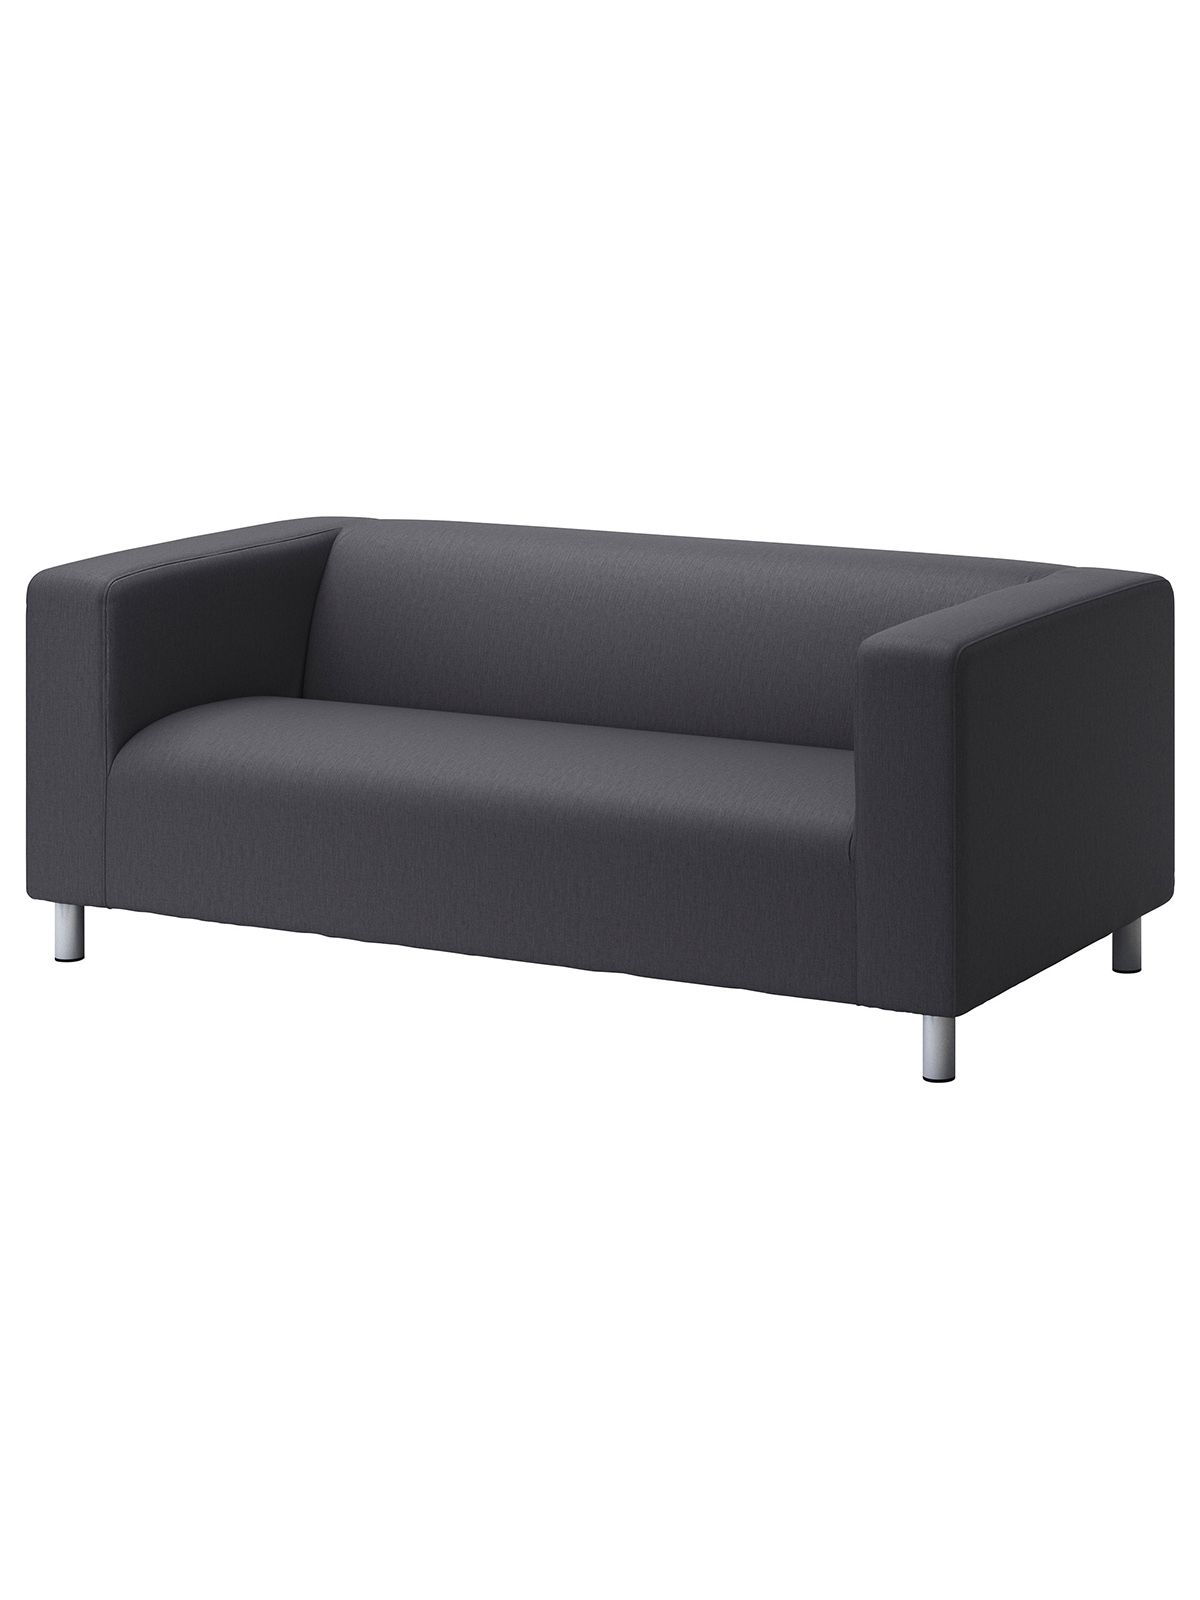 Best IKEA Products, KLIPPAN sofa in gray